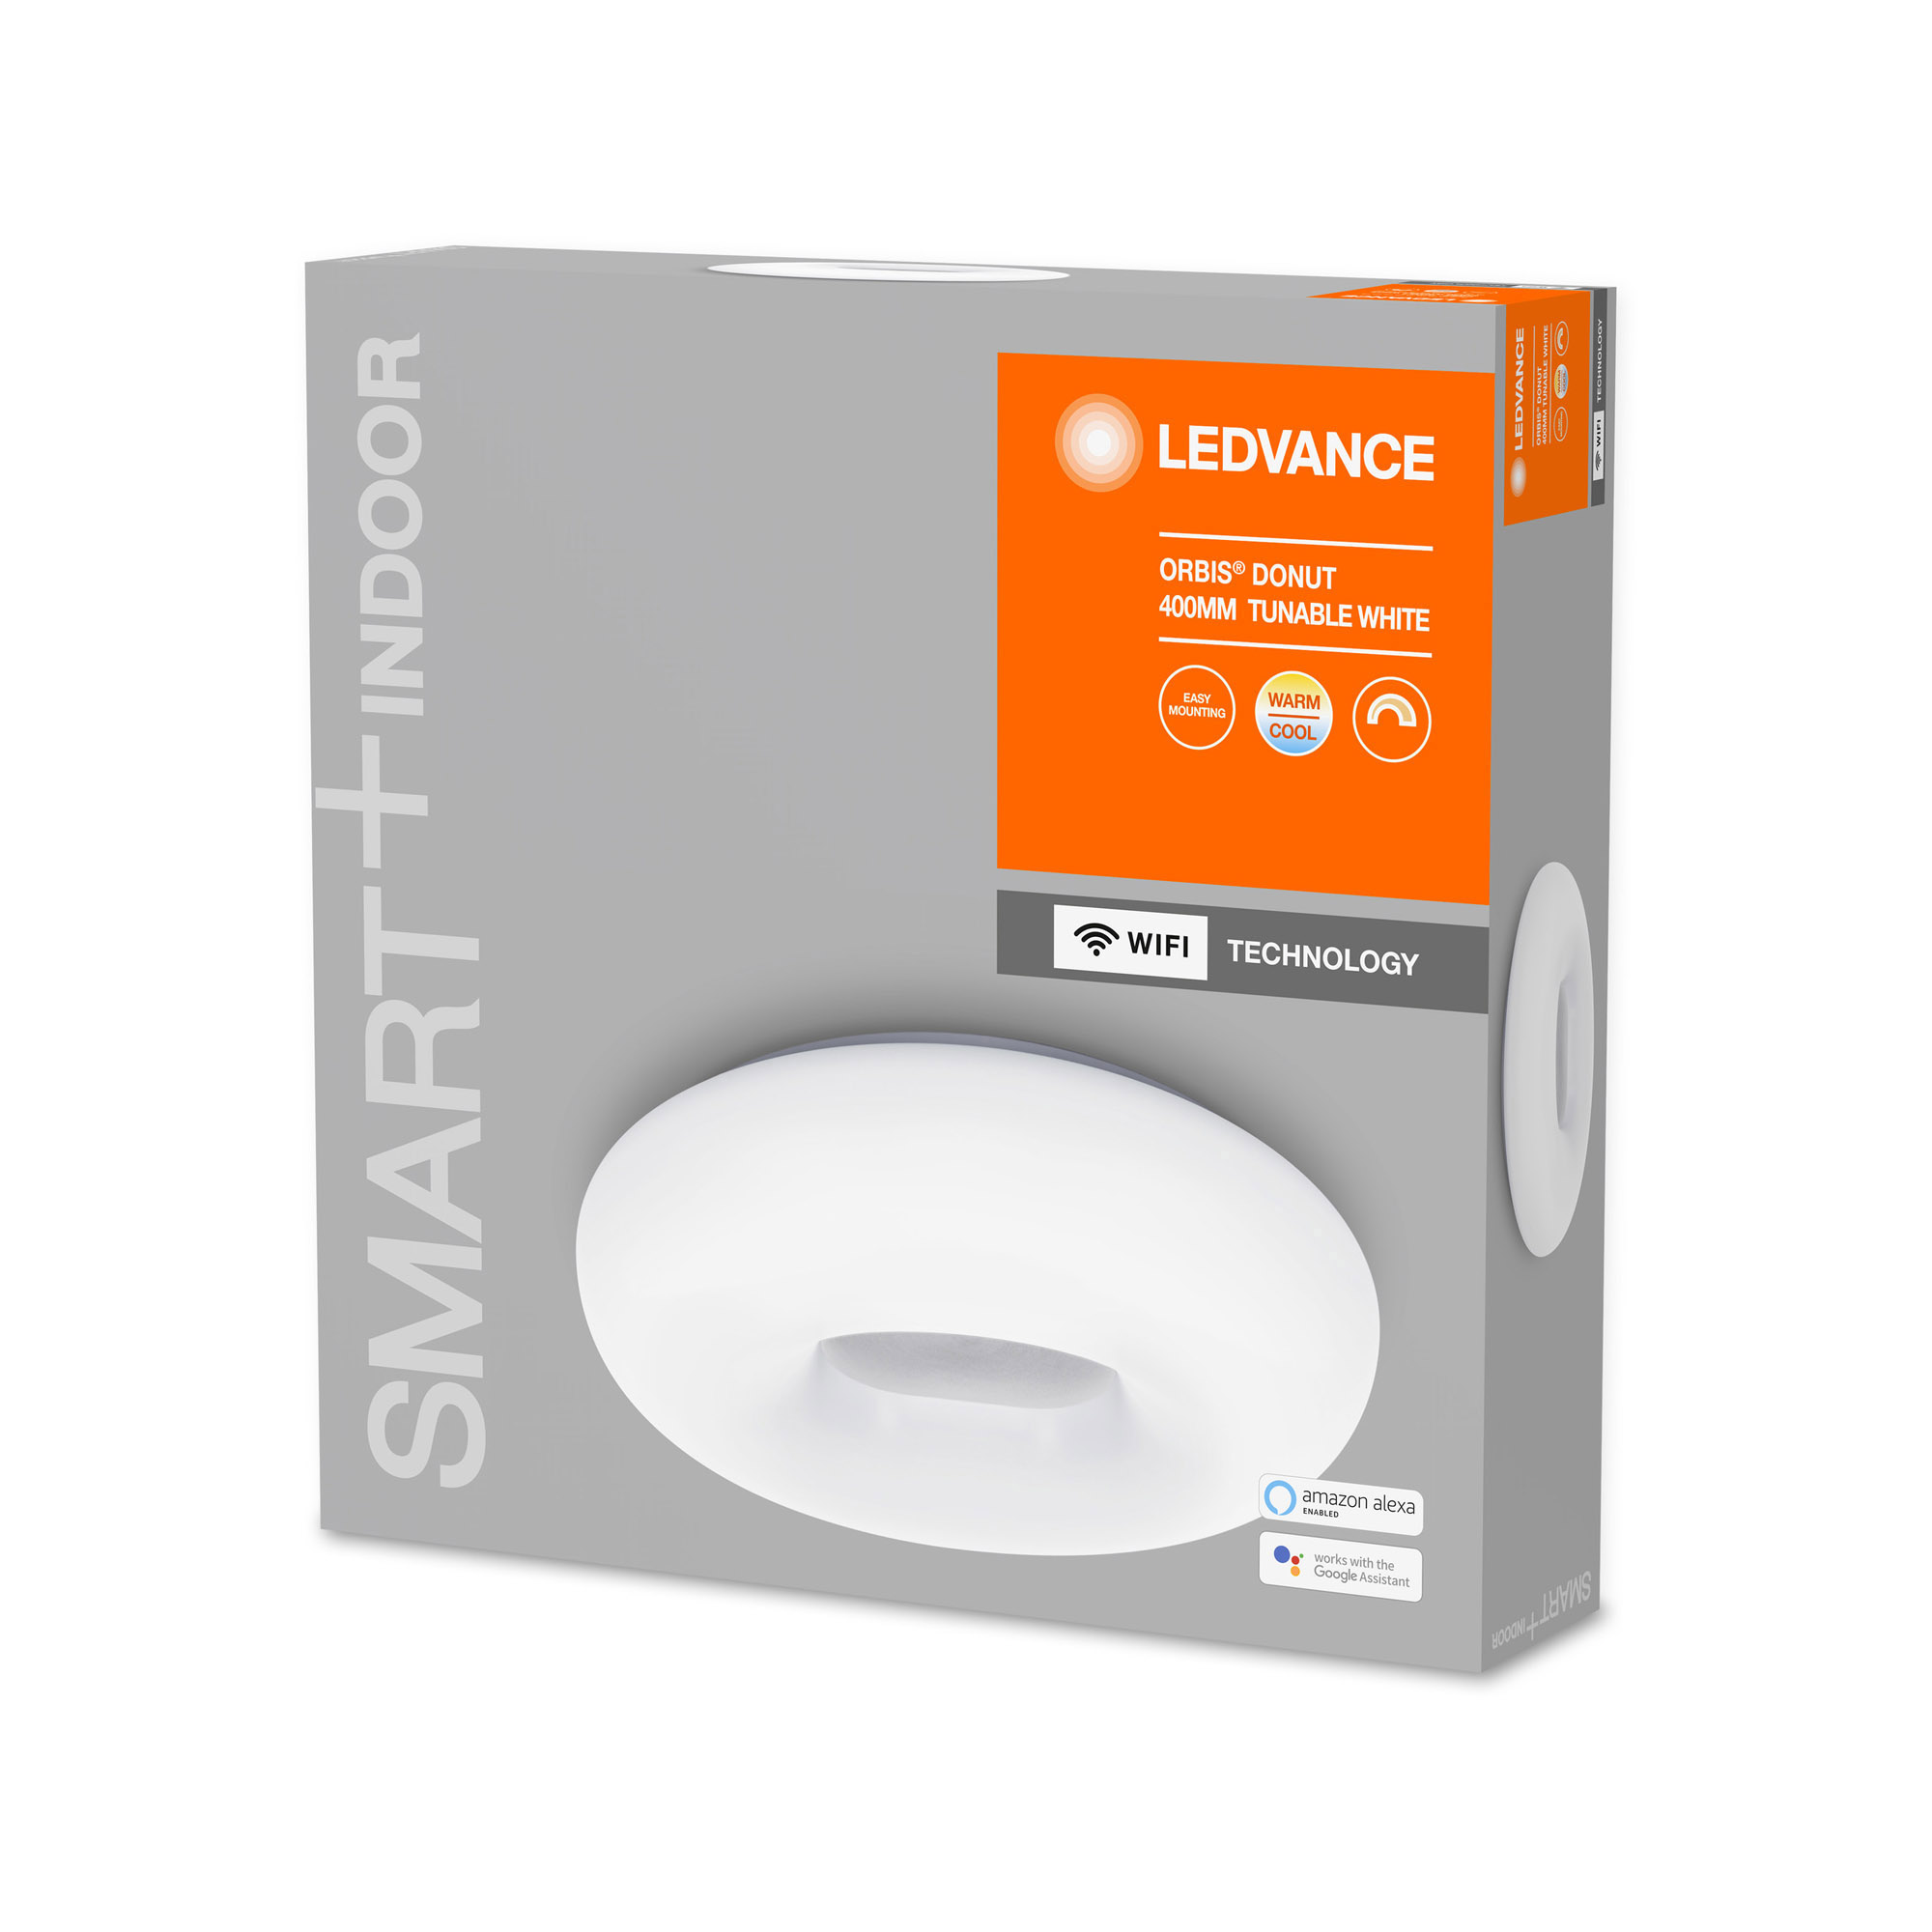 LEDVANCE SMART+ WiFi Tunable White LED Ceiling Light ORBIS Donut 400mm white 2500lm